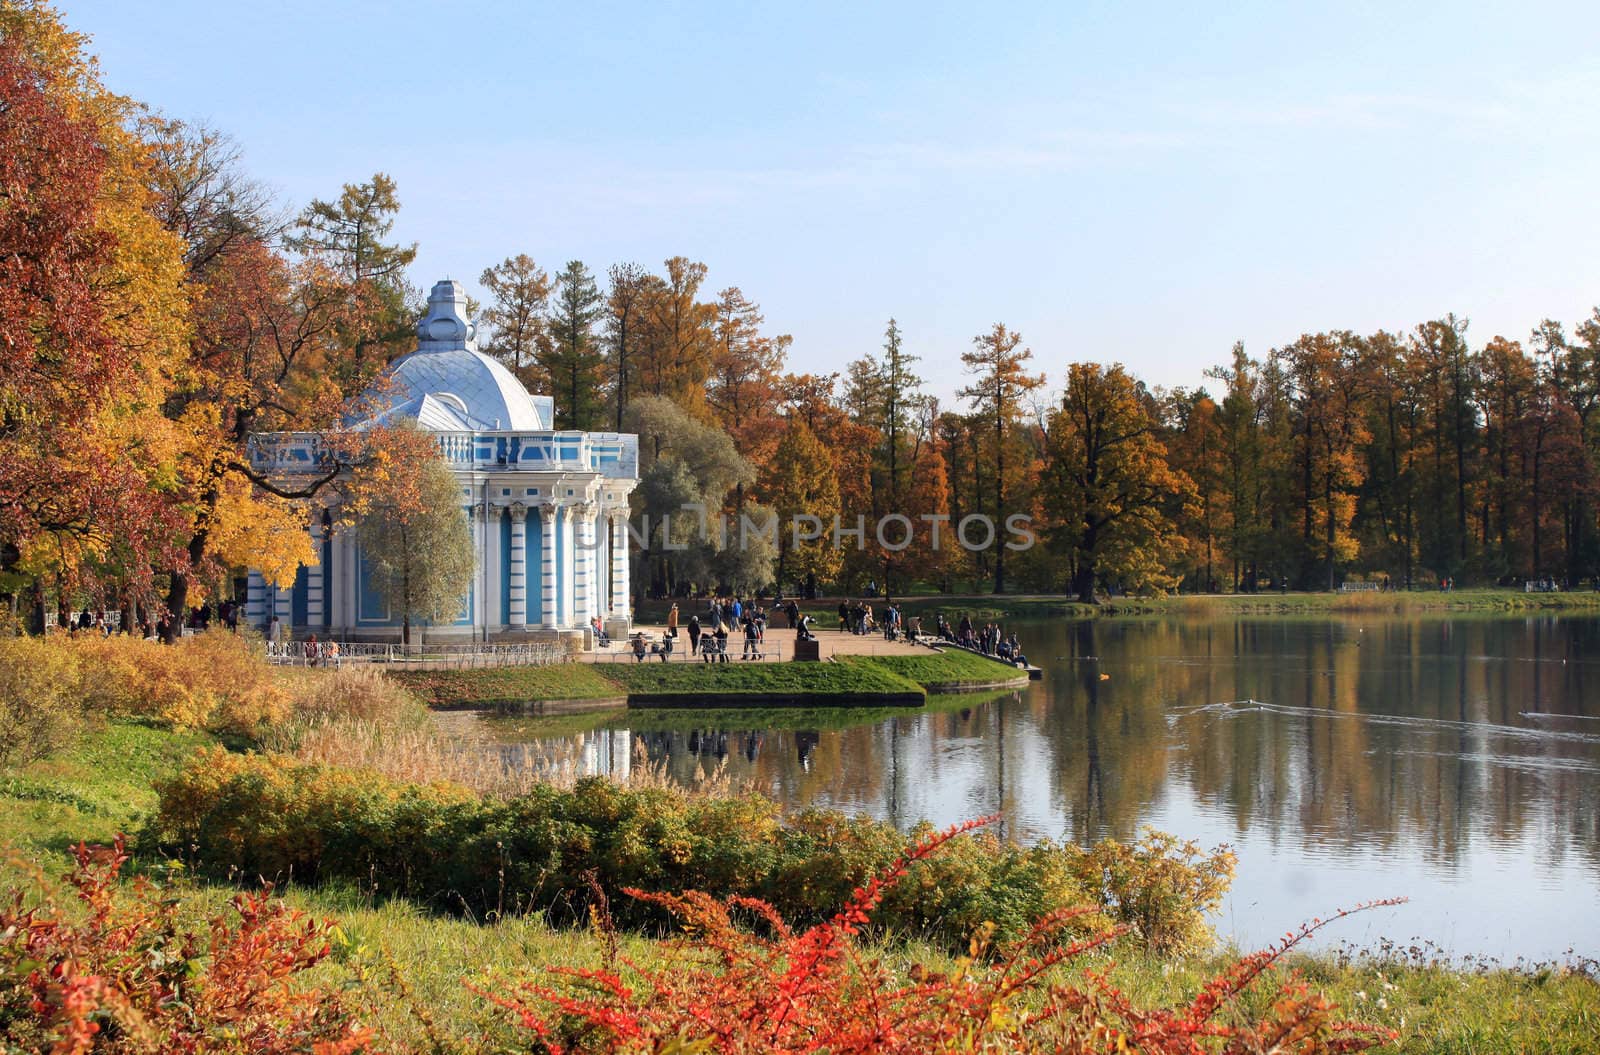 Summer residence of the Russian tsars Tsarskoye Selo (Pushkin) 25 km south-east of St. Petersburg Russia.